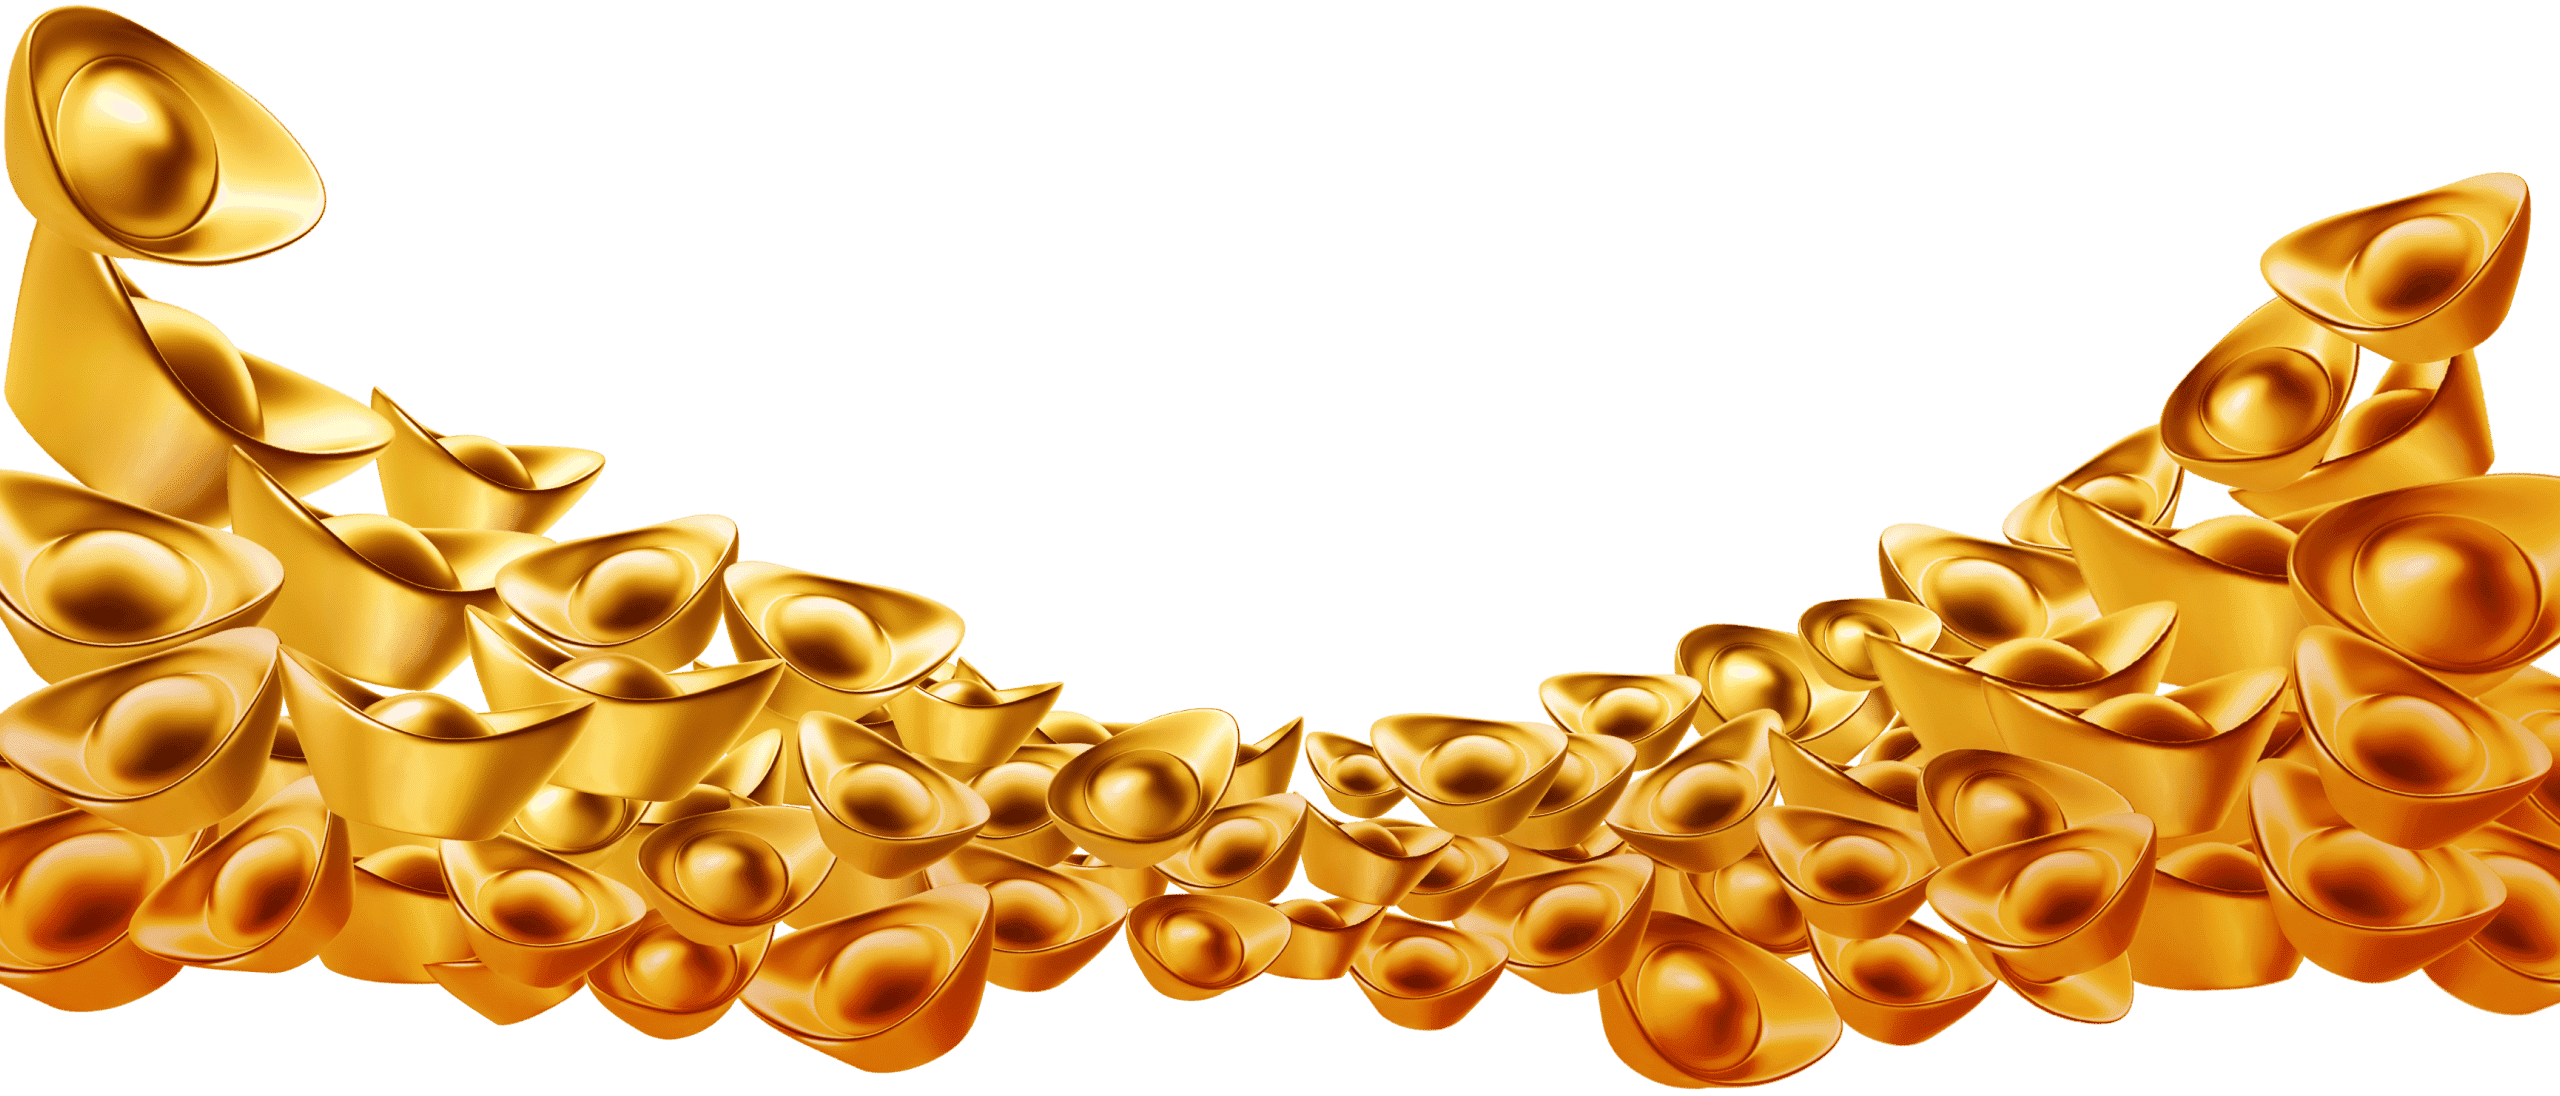 Gold symbols